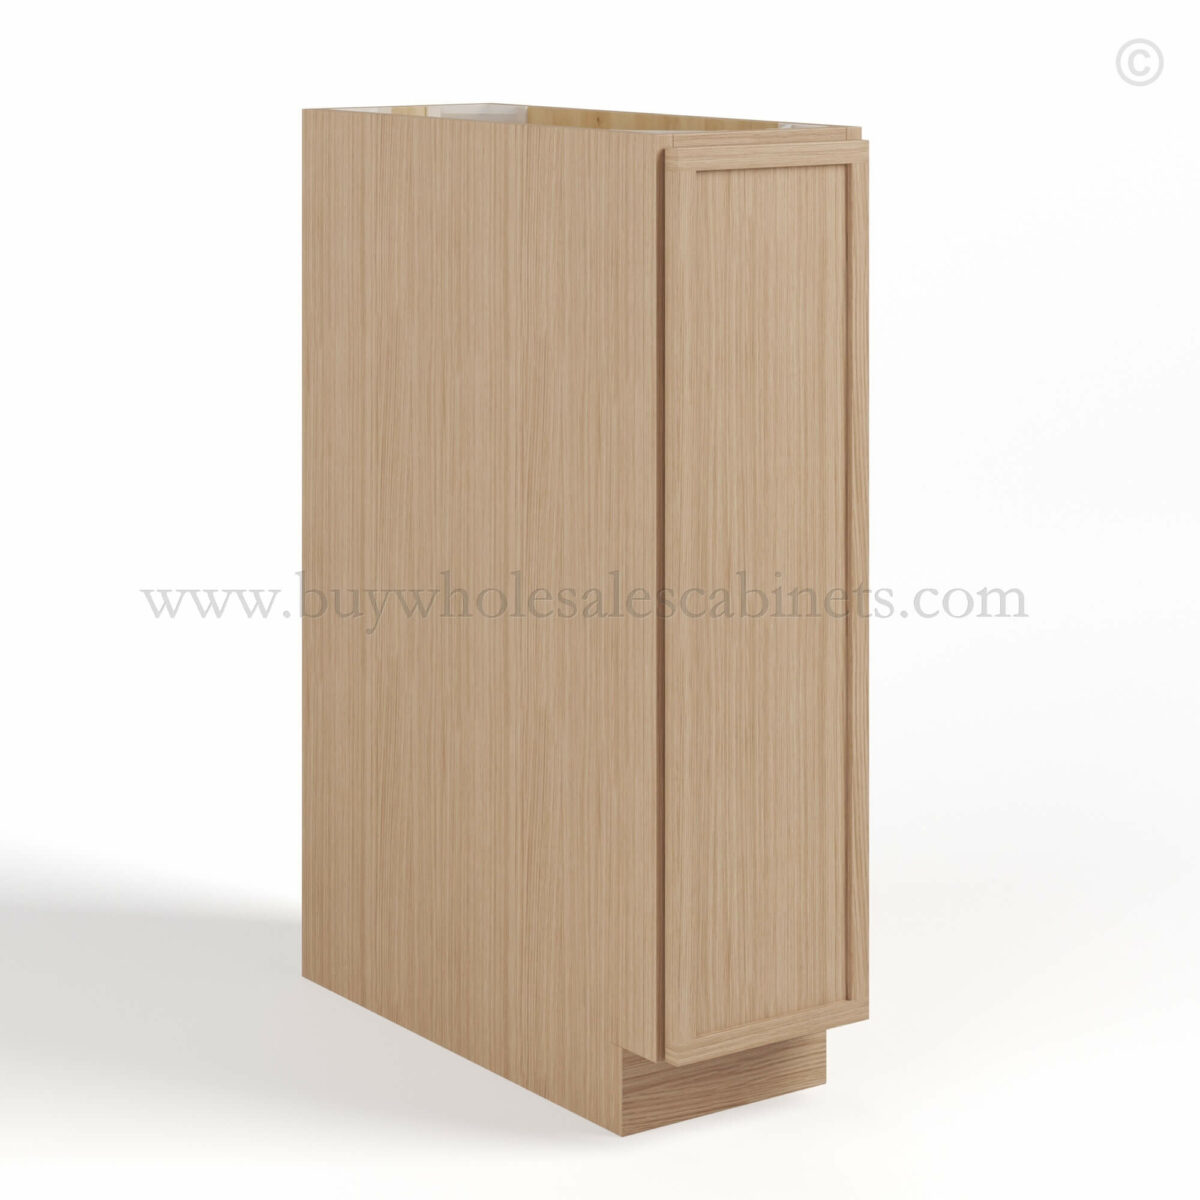 Slim Oak Shaker Spice Pull Base Cabinet, rta cabinets, wholesale cabinets